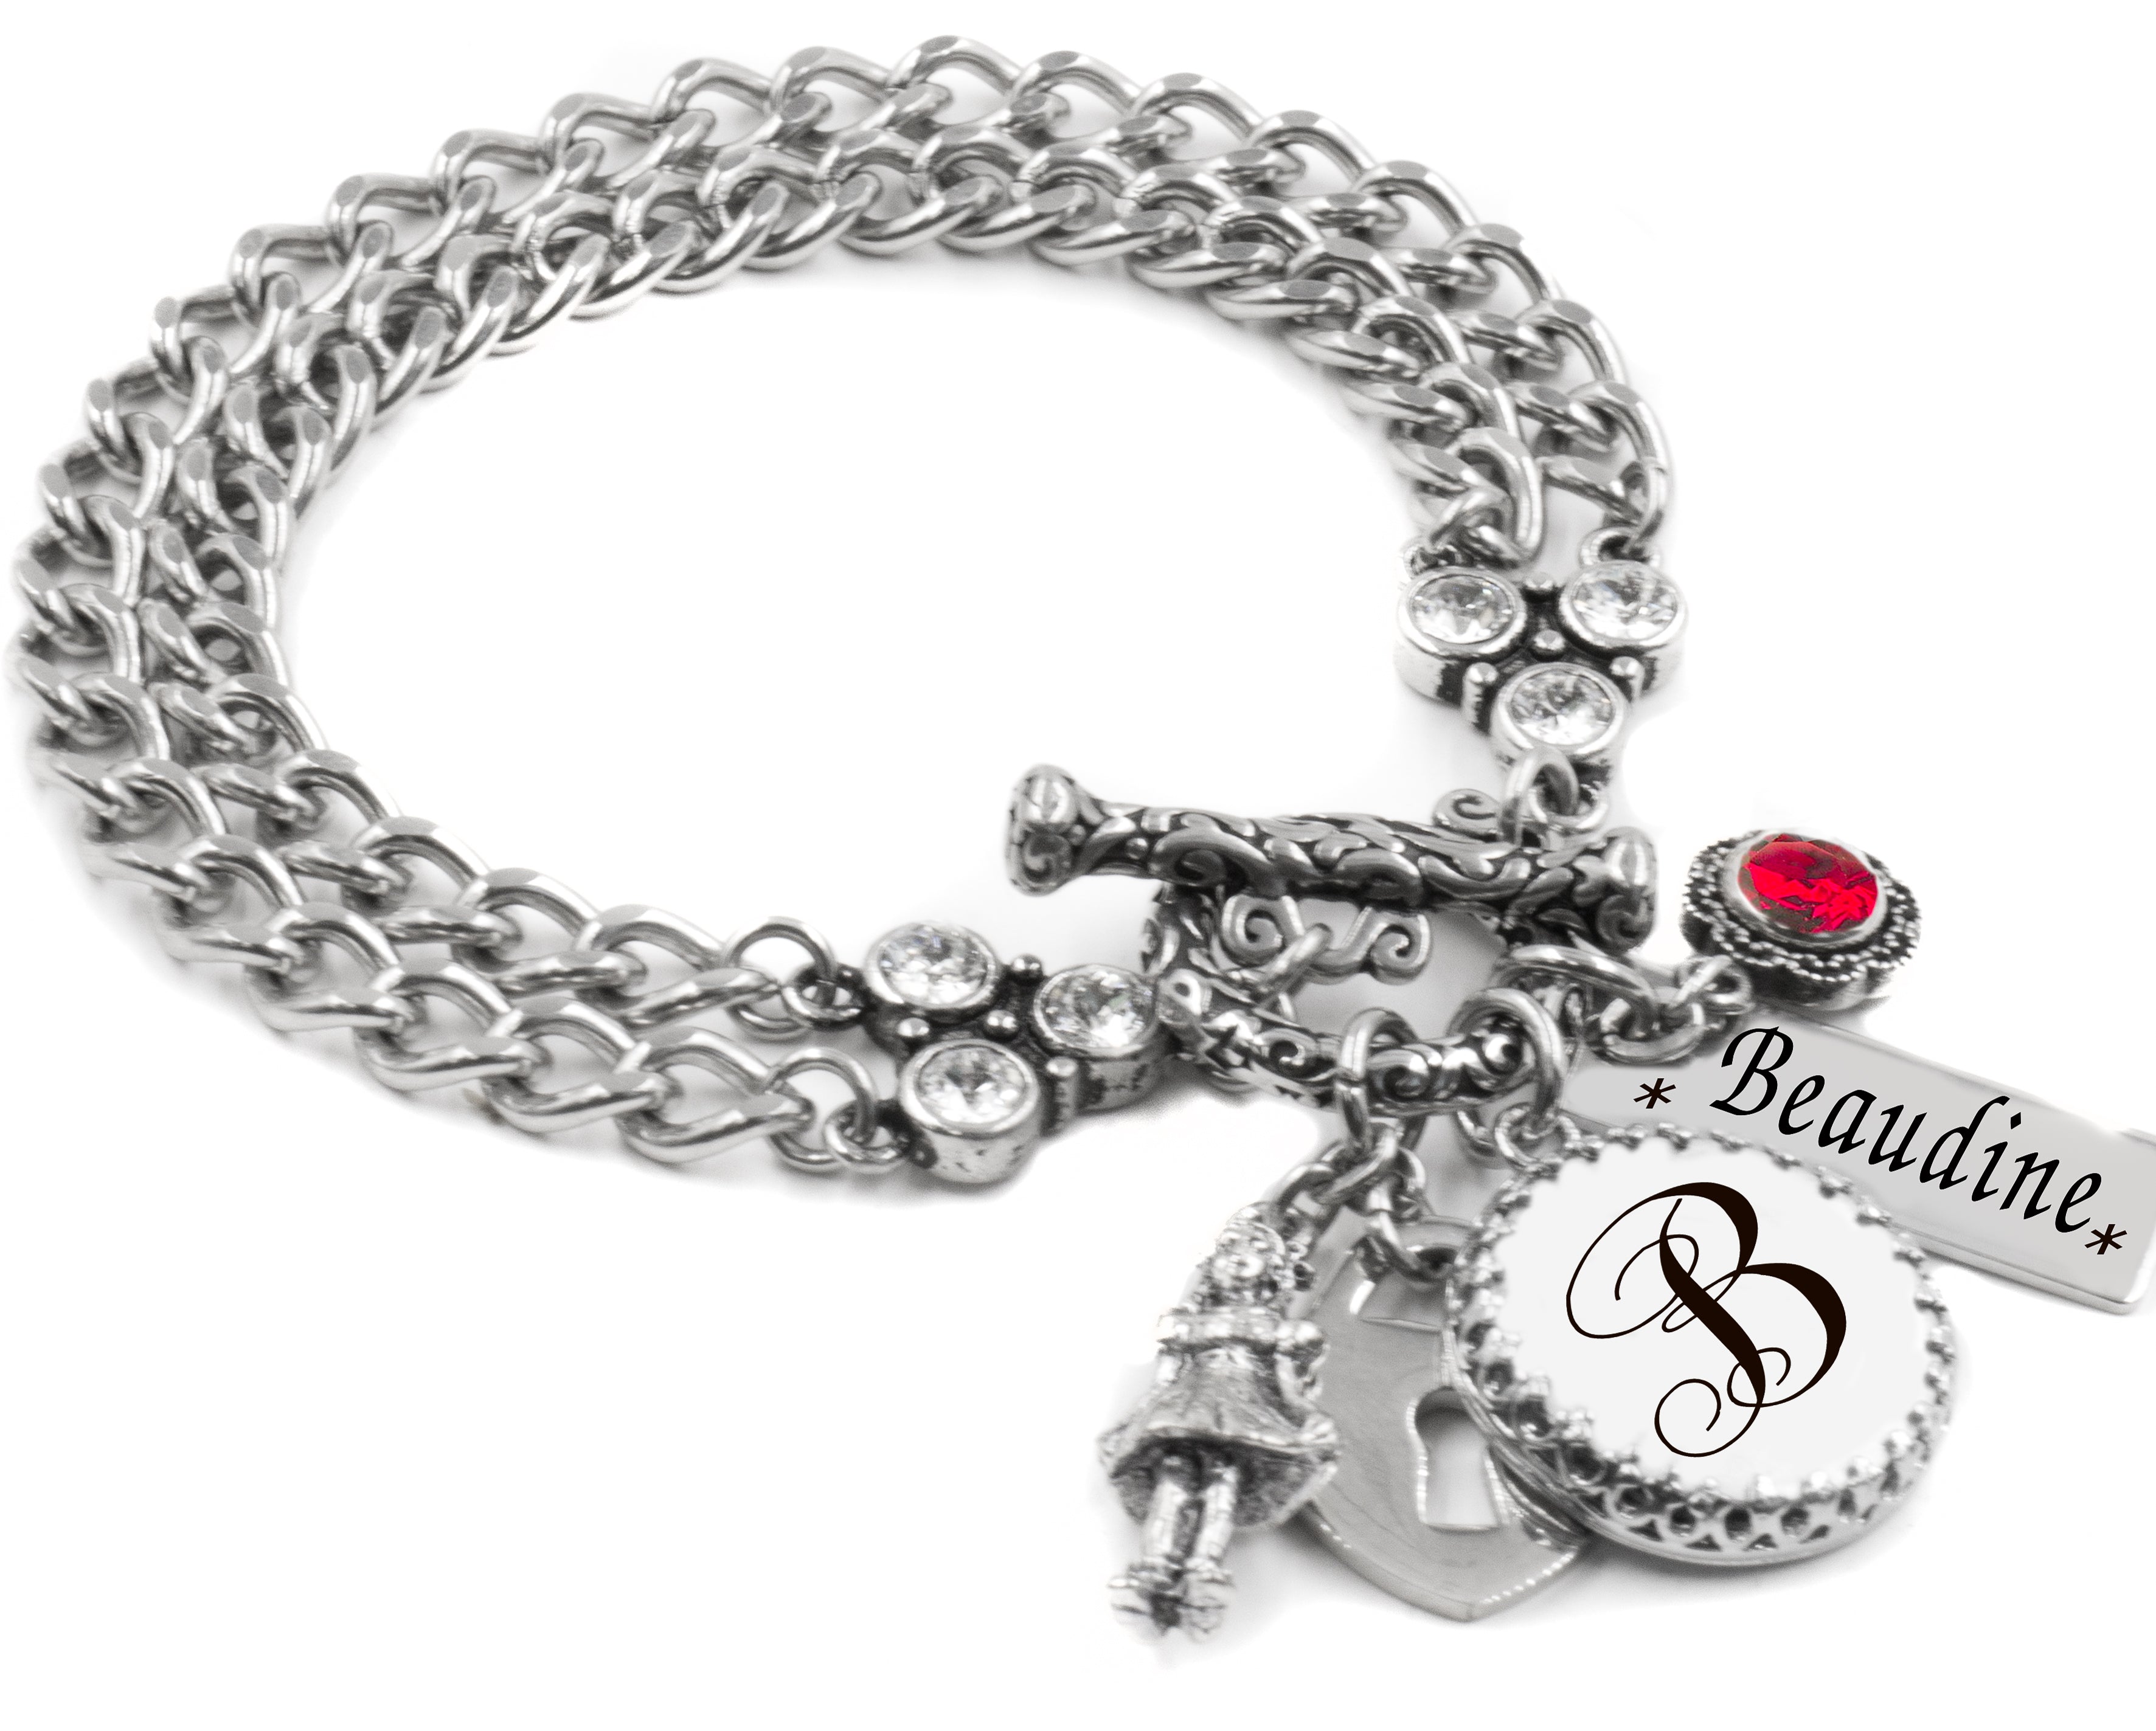 Personalized Monogram Charm Bracelet in Sterling Silver